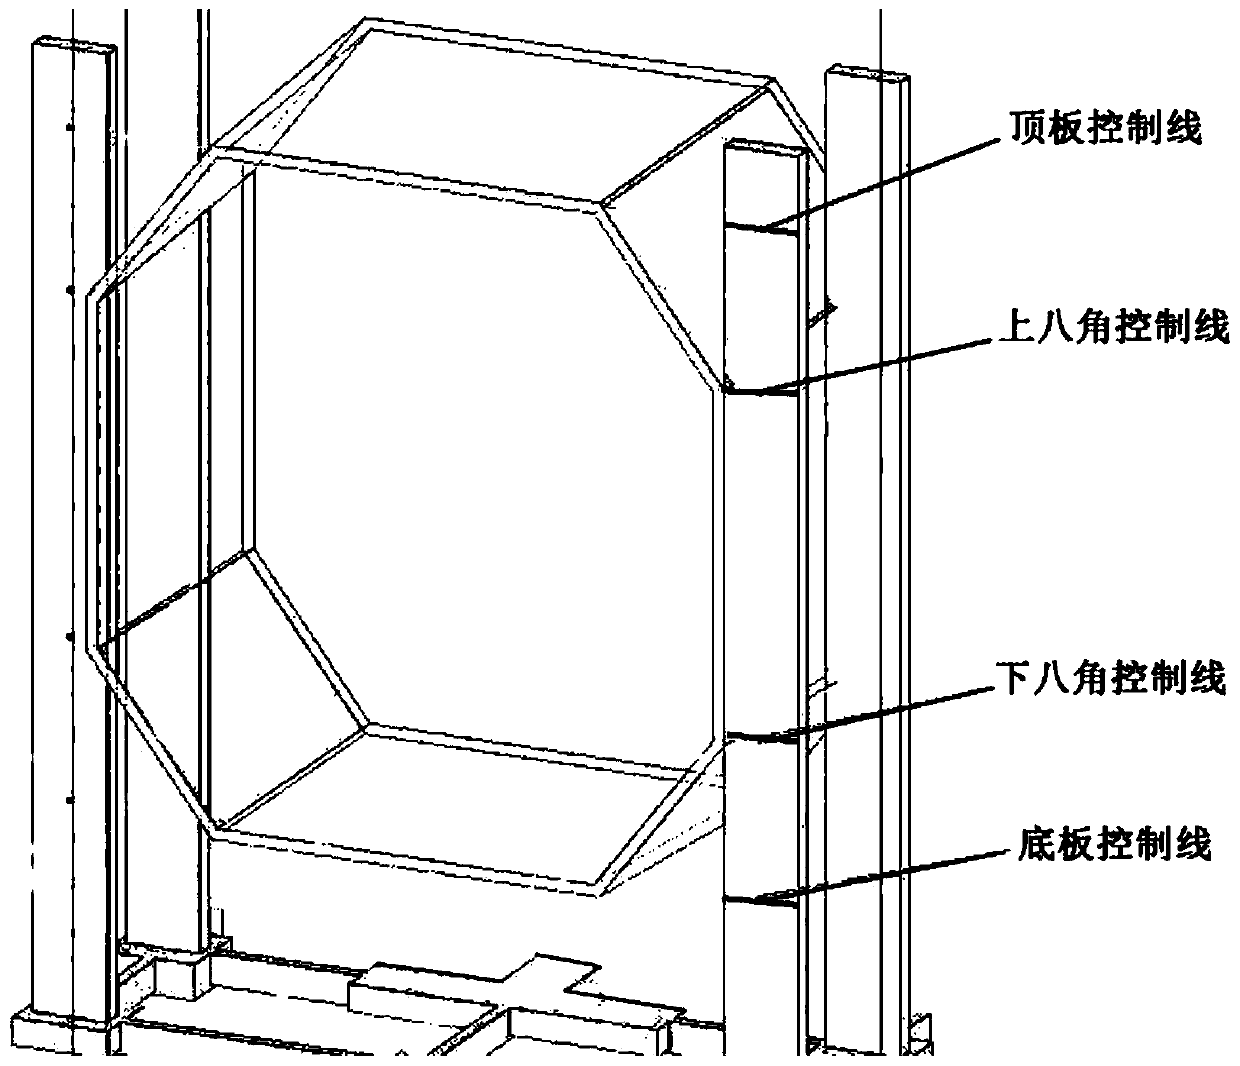 High-precision non-prism lofting process for wind tunnel body